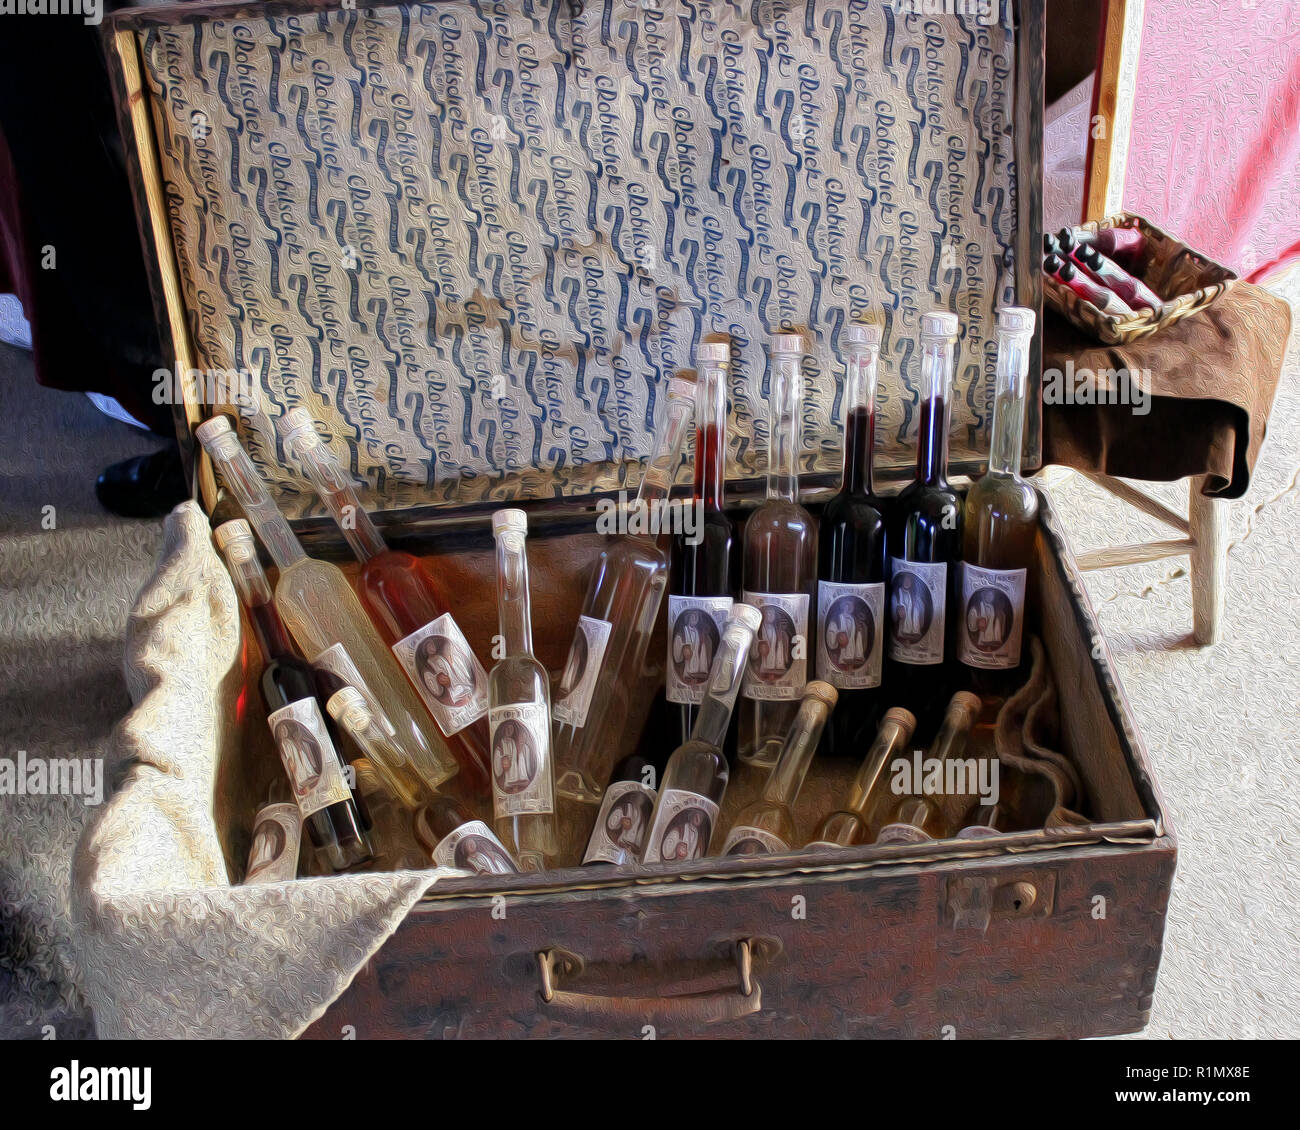 Valigia con vino Foto stock - Alamy